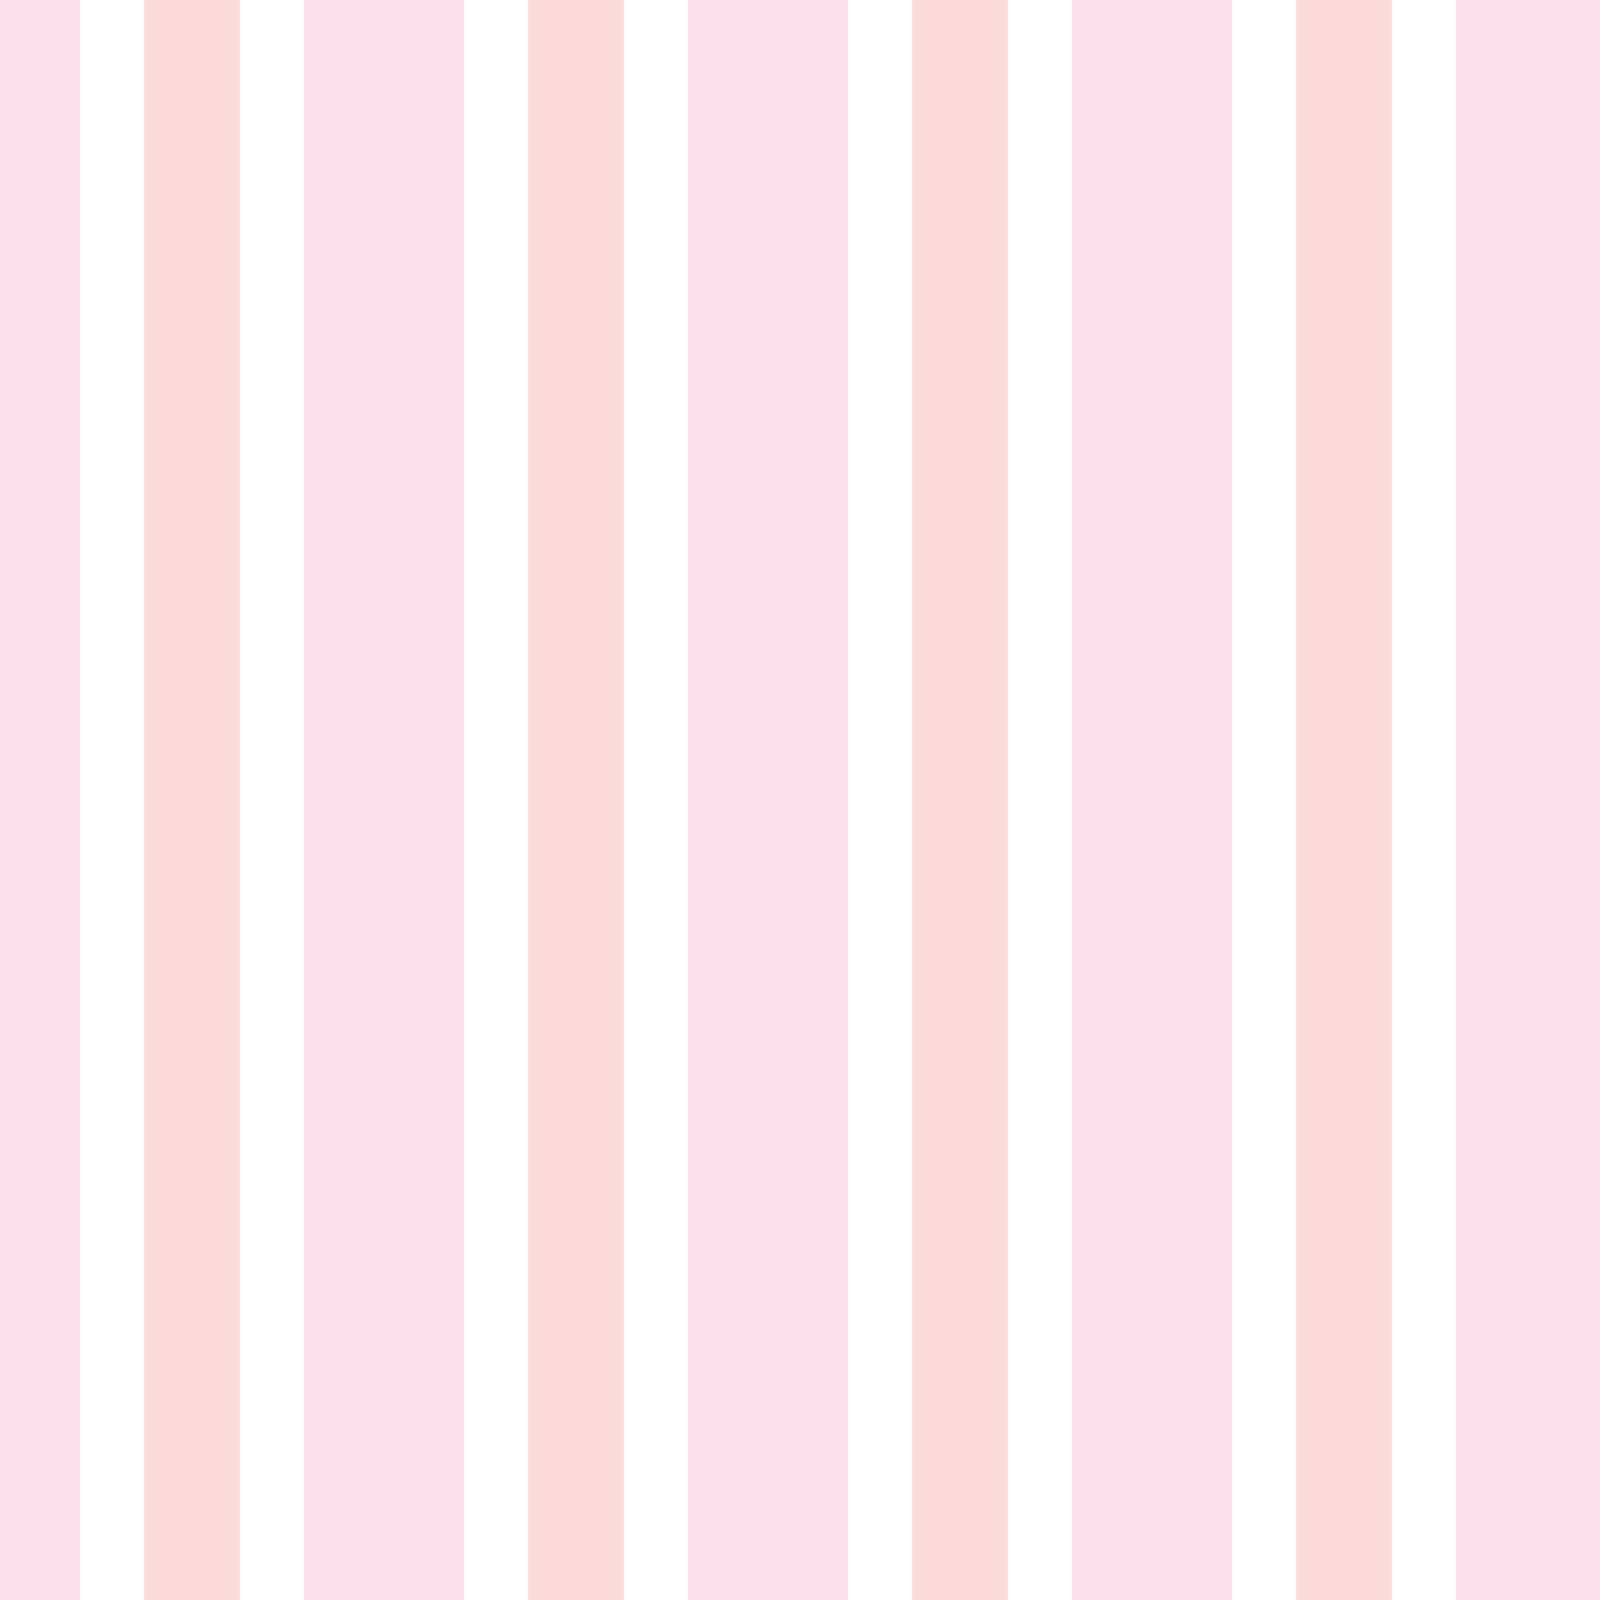 Stripes background by doraclub